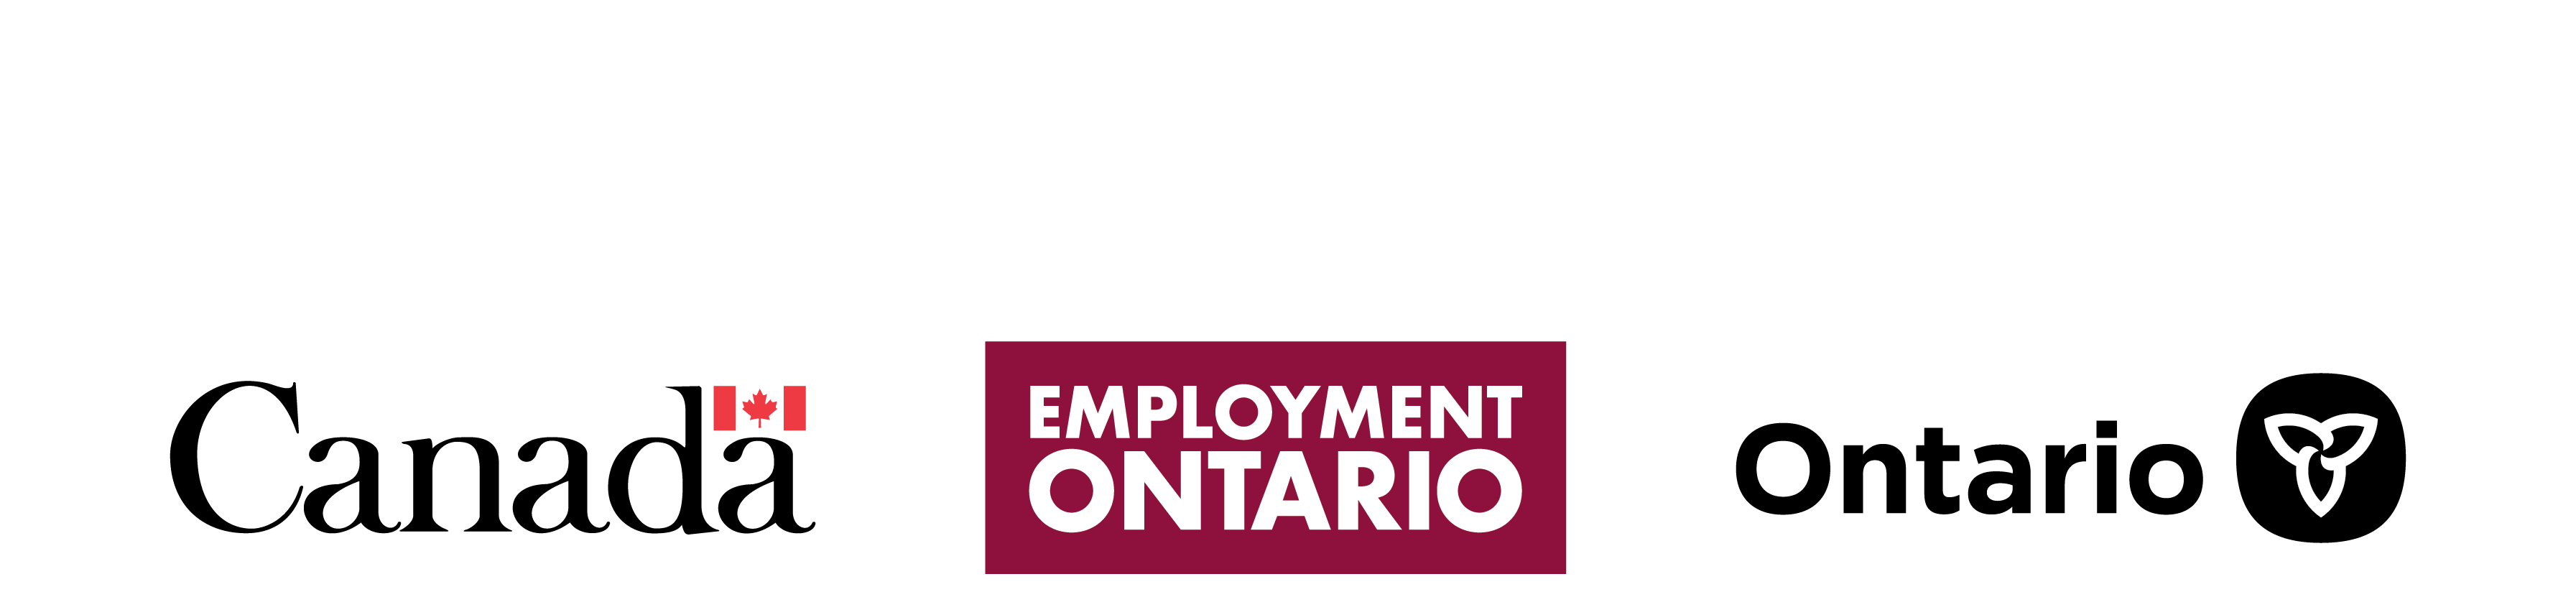 Employment Ontario tri workmark